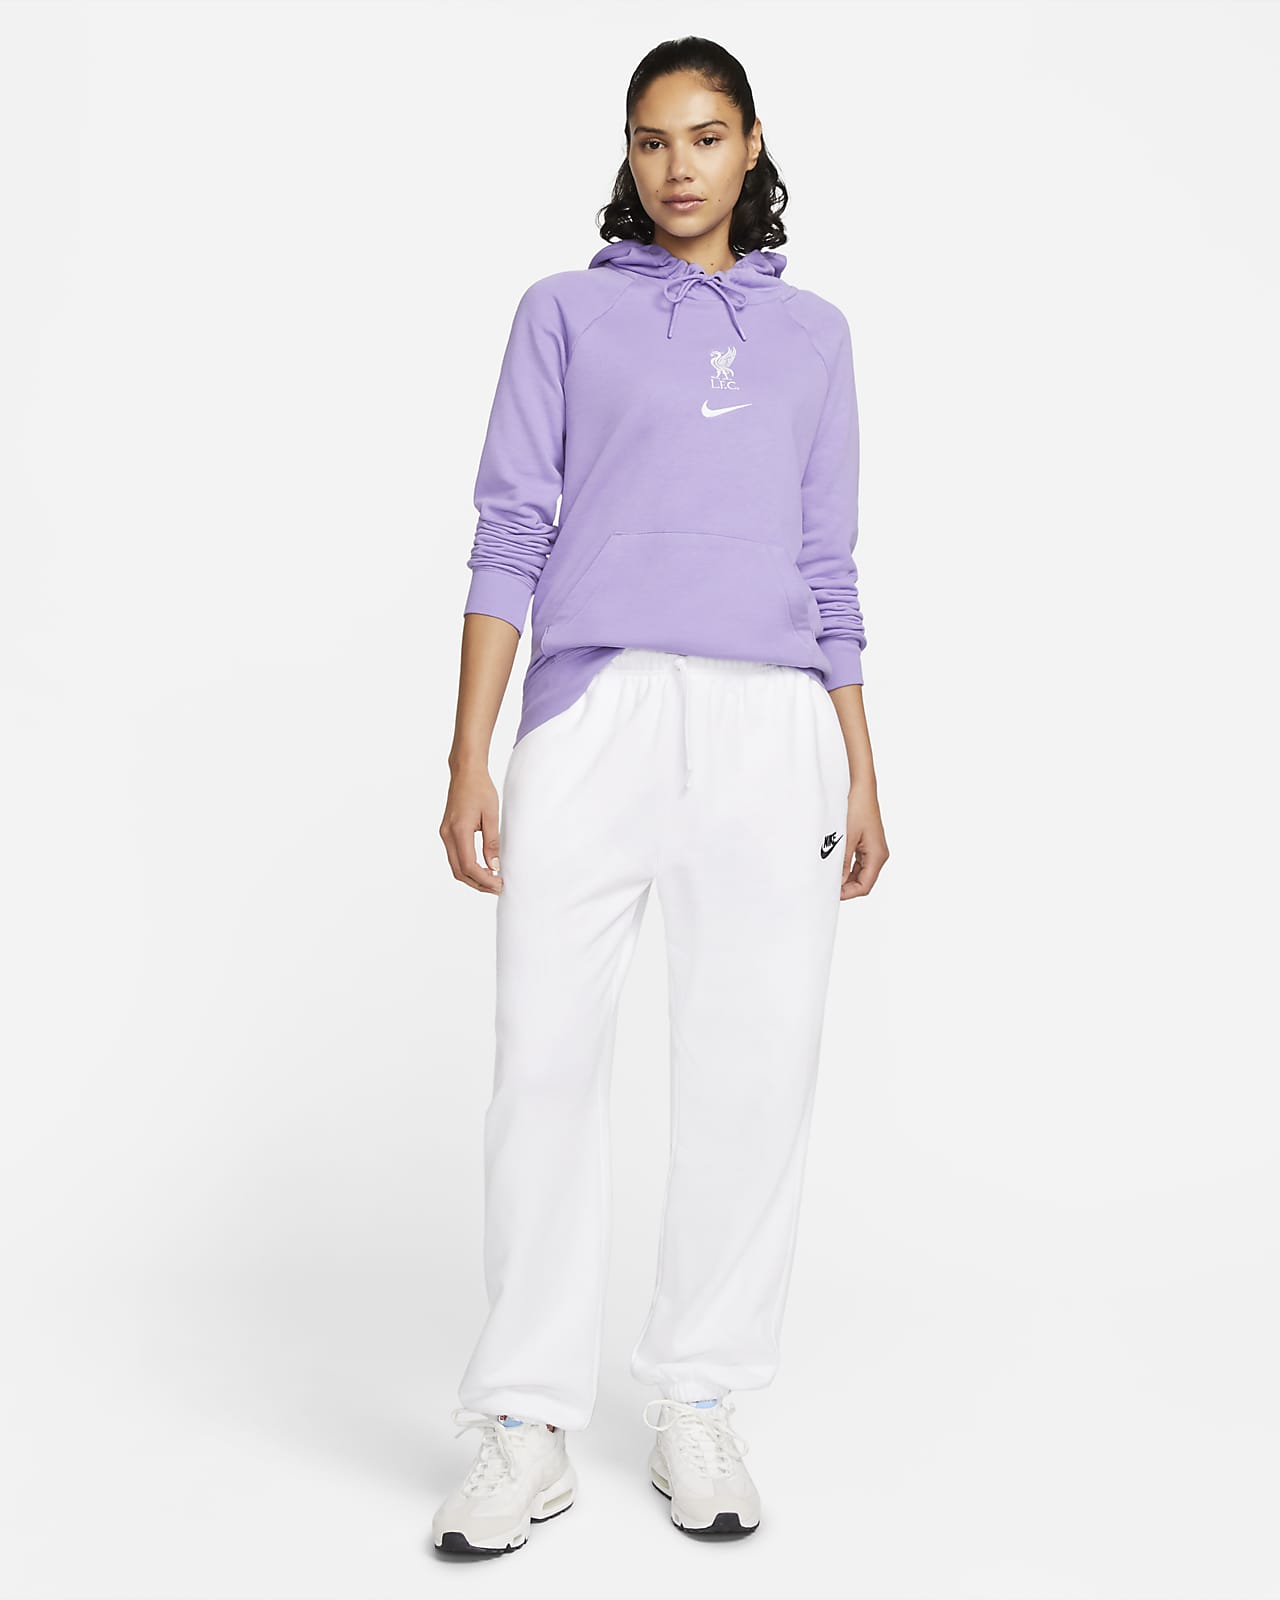 Nike mini Swoosh oversized Purple hoodie, ASOS